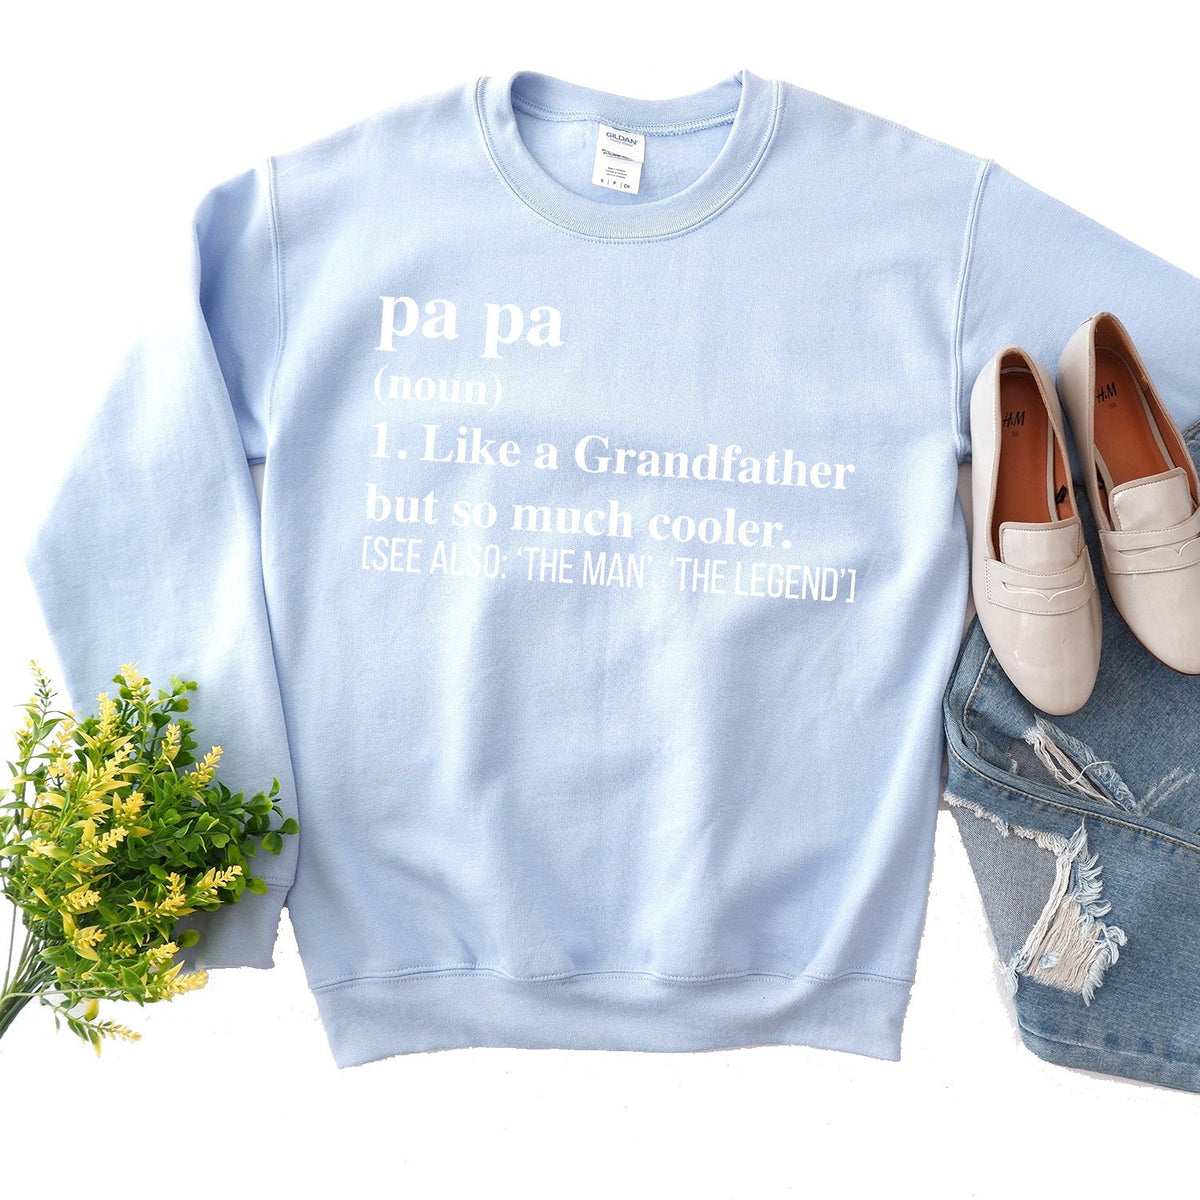 Pa Pa (Noun) 1. Like A Grandfather But So Much Cooler - Long Sleeve Heavy Crewneck Sweatshirt